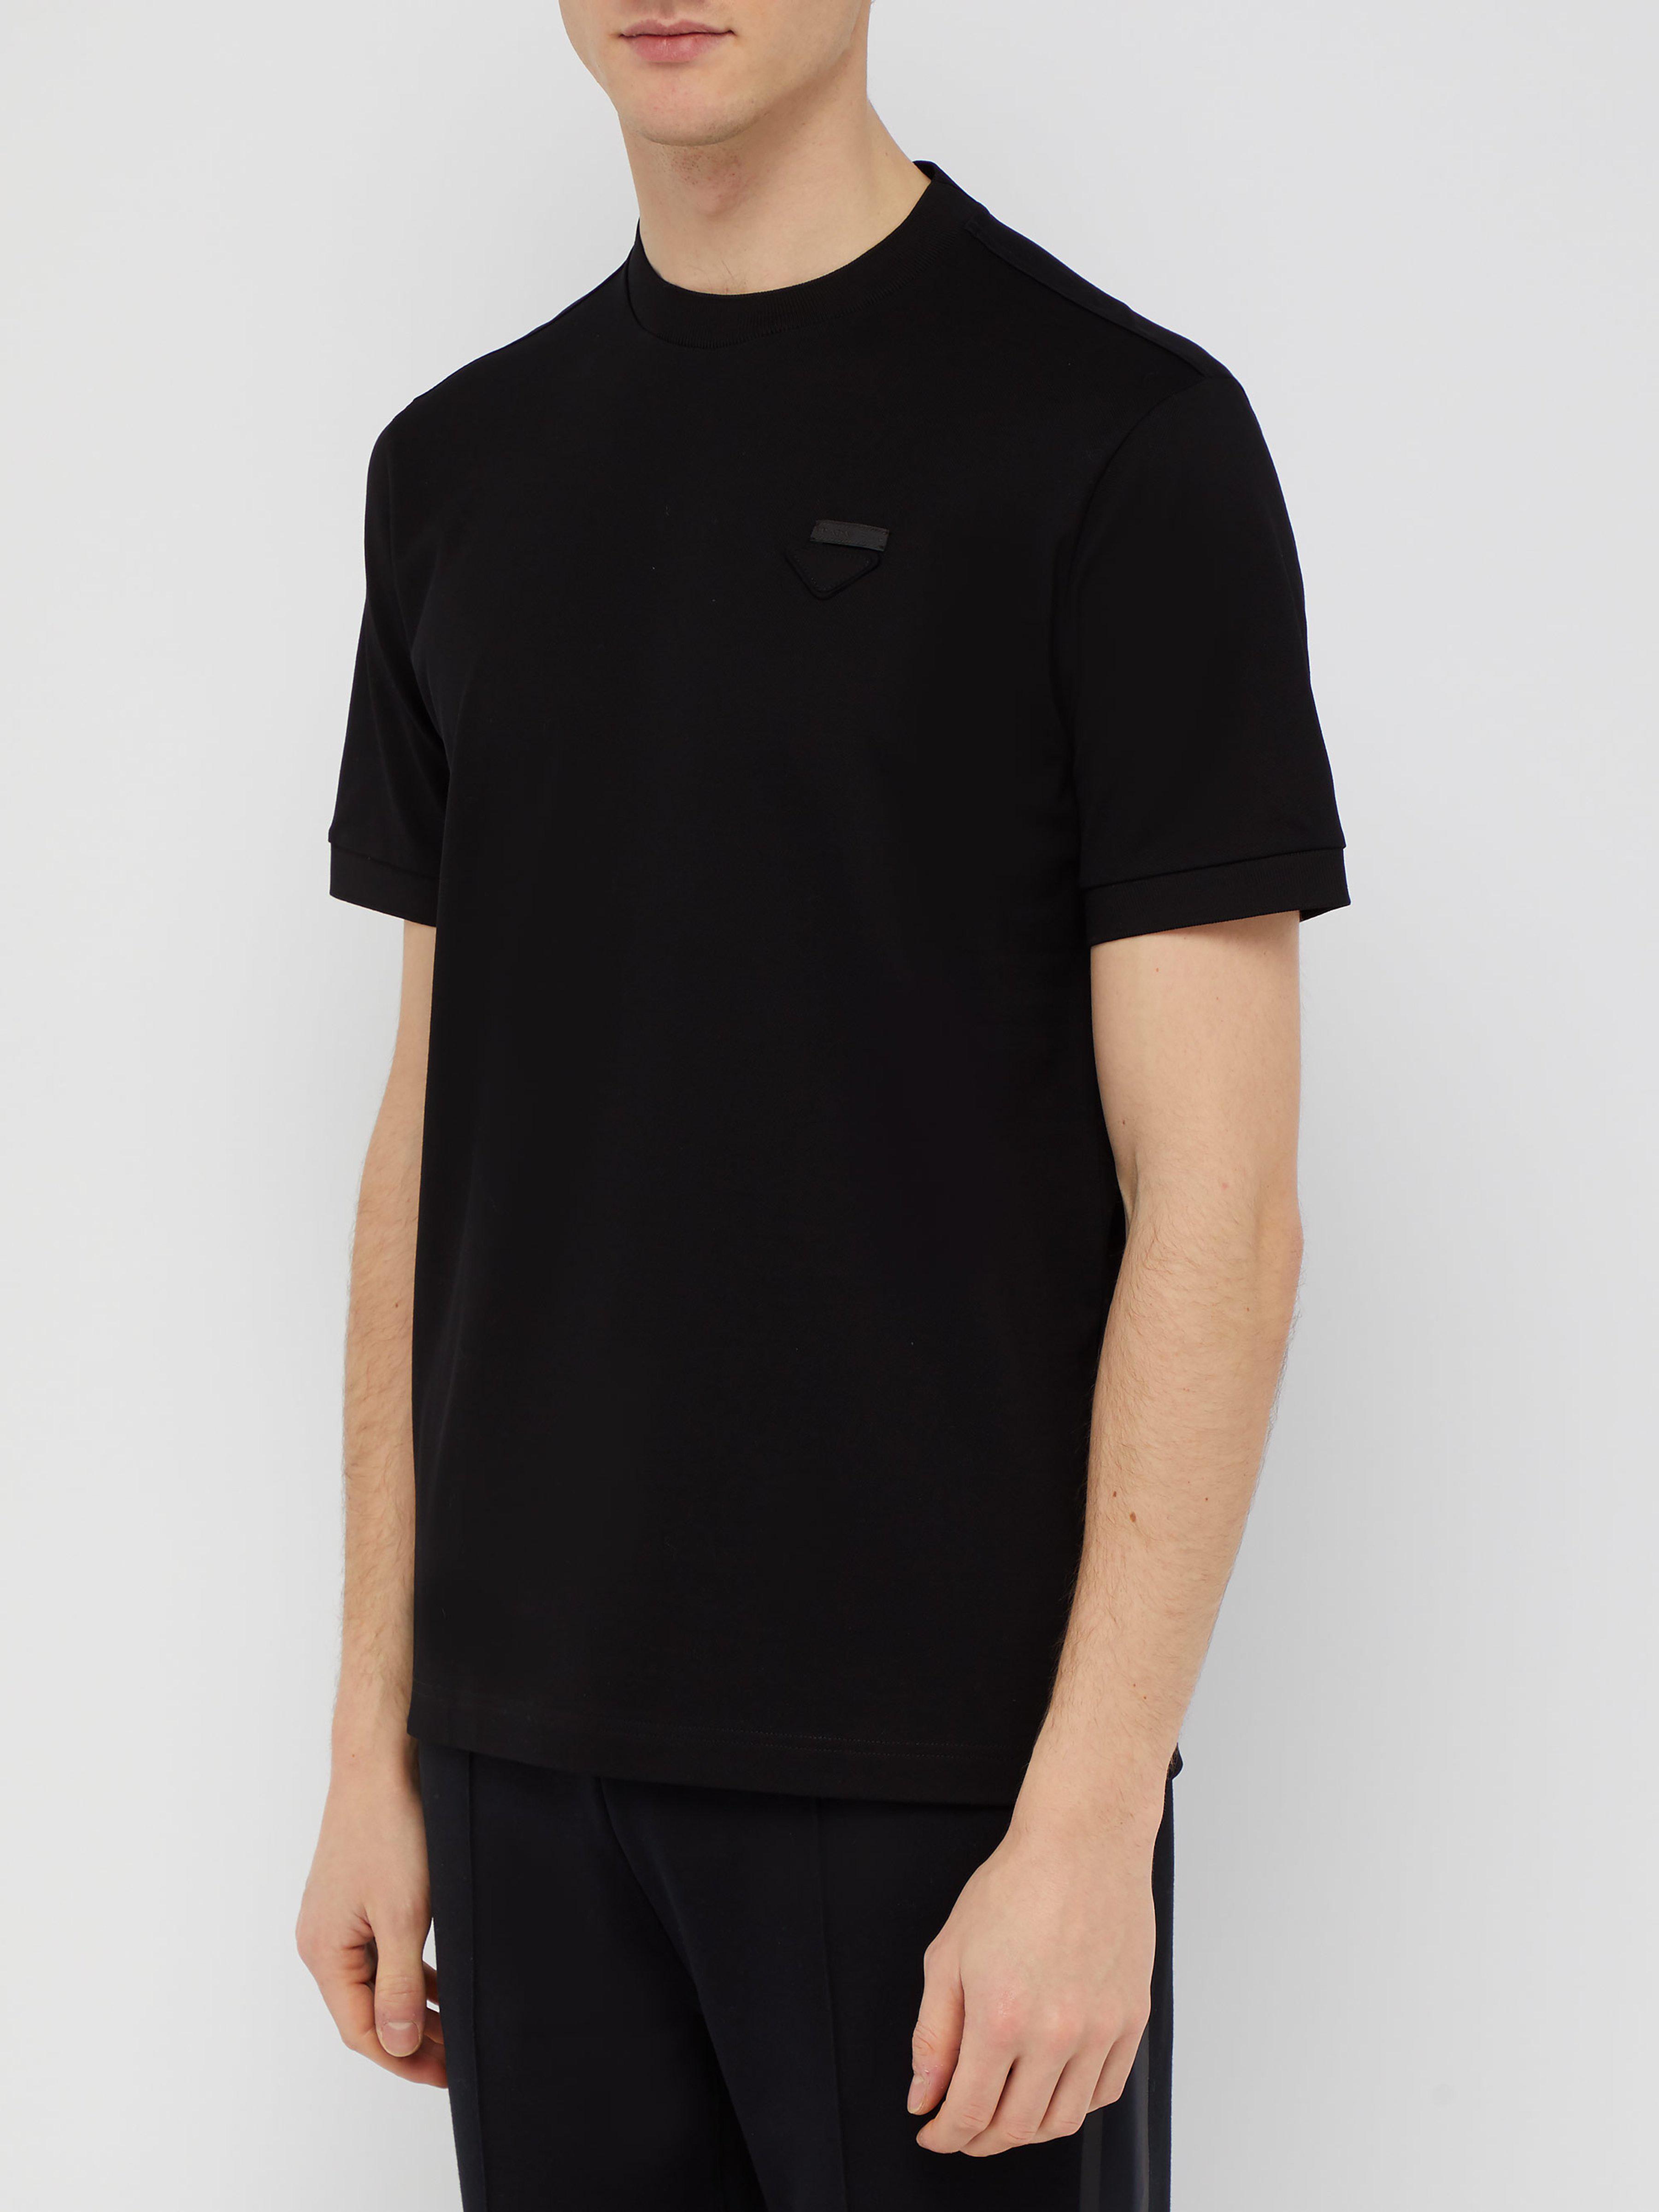 Prada Cotton Logo Piqué T-shirt in Black for Men - Lyst